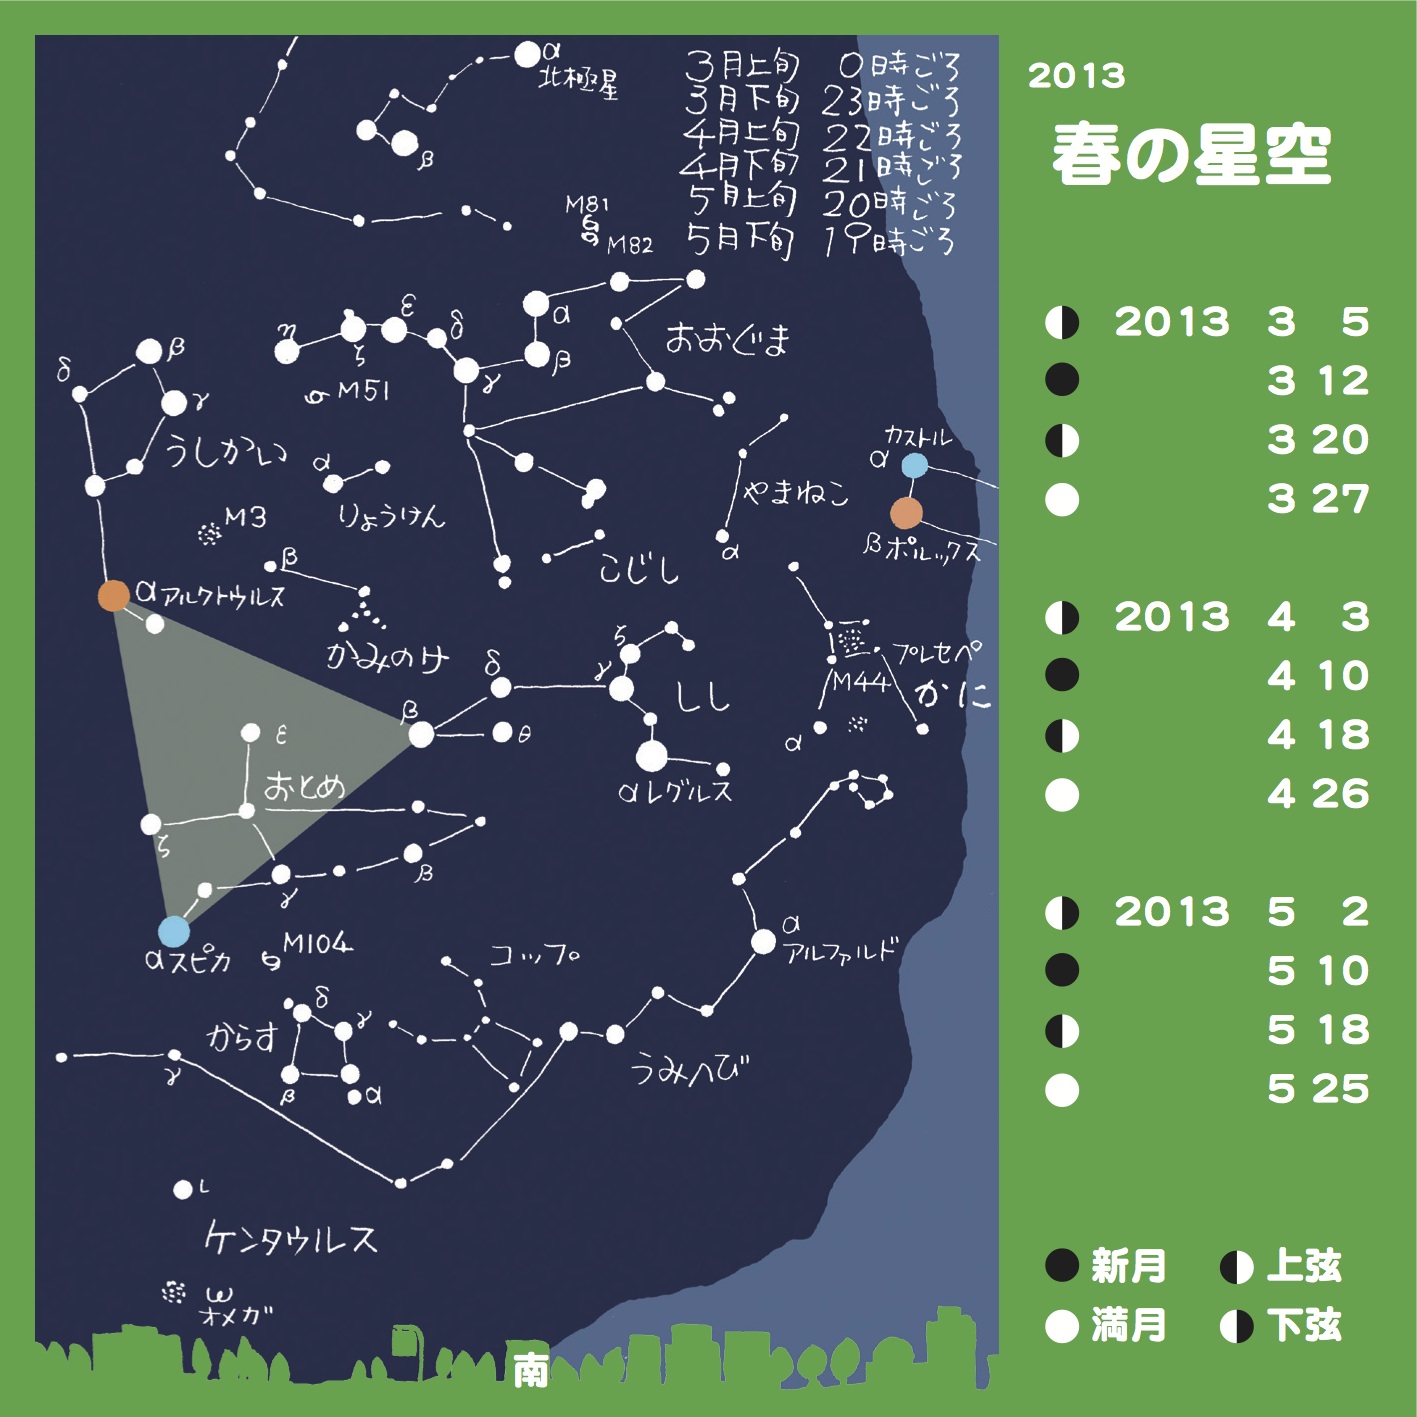 http://www.ncsm.city.nagoya.jp/study/astro/P3_2013_spring.jpg